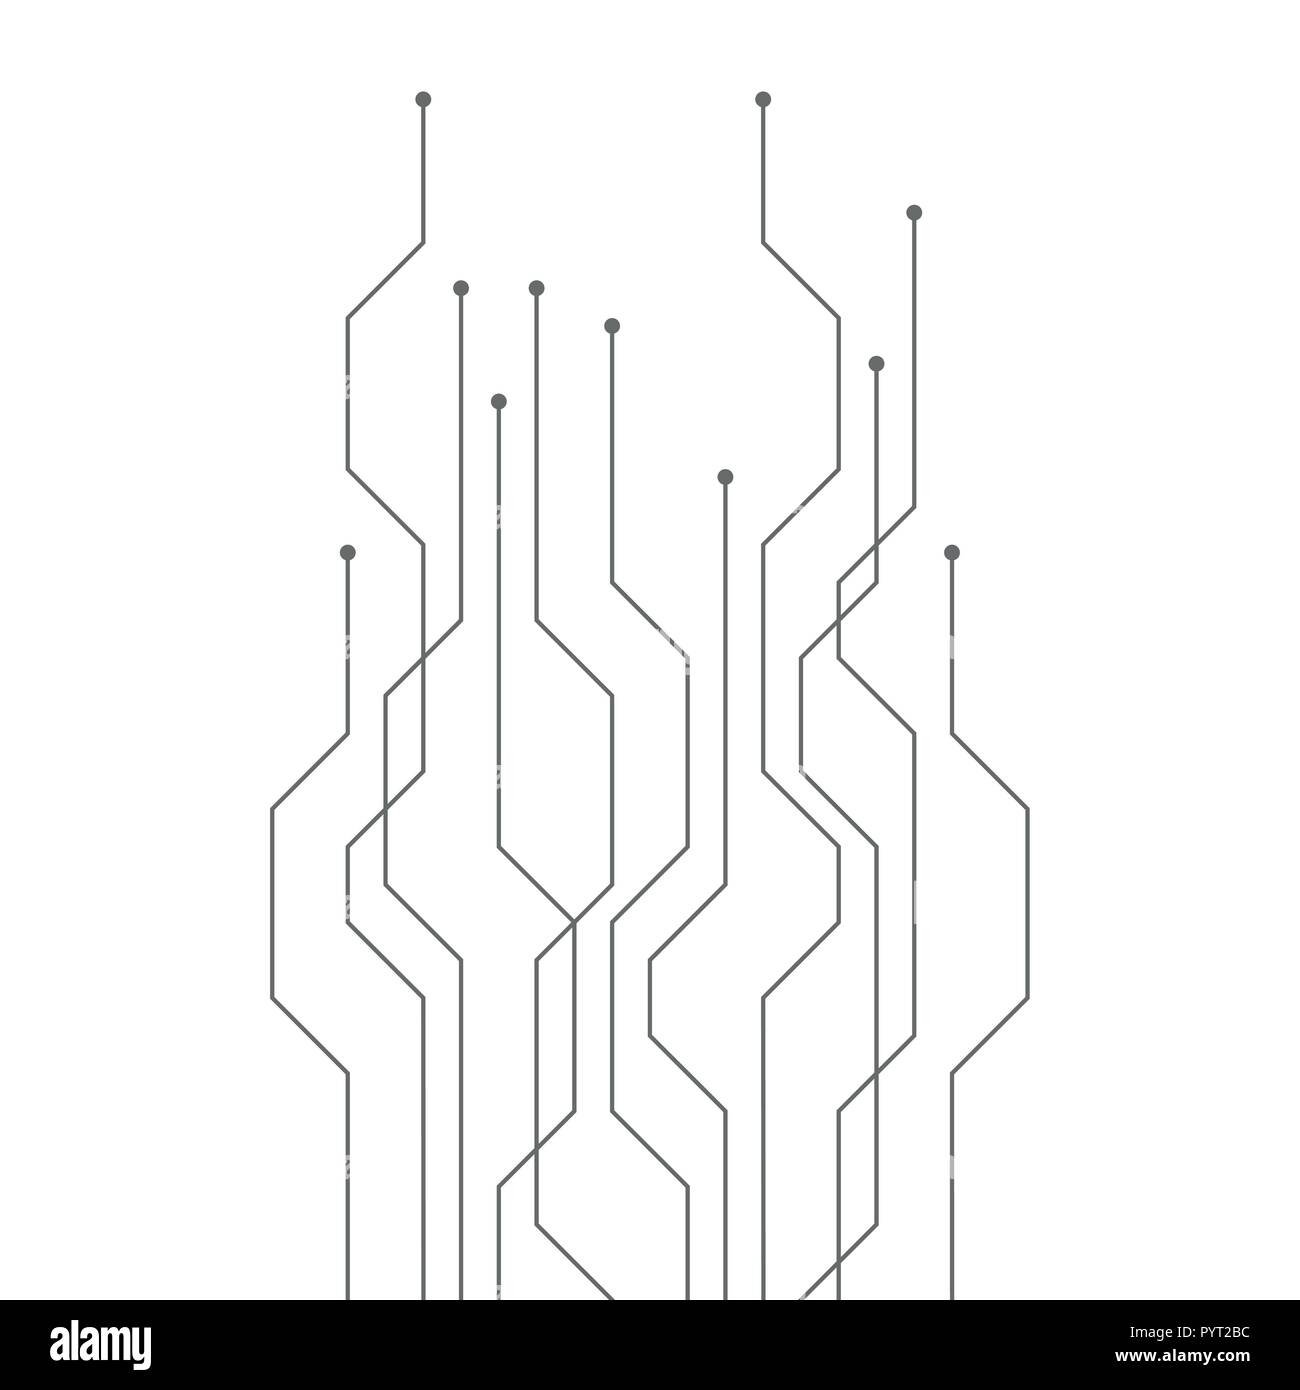 Die digitale Technik elektronik platine Elemente Vektor-illustration EPS 10. Stock Vektor